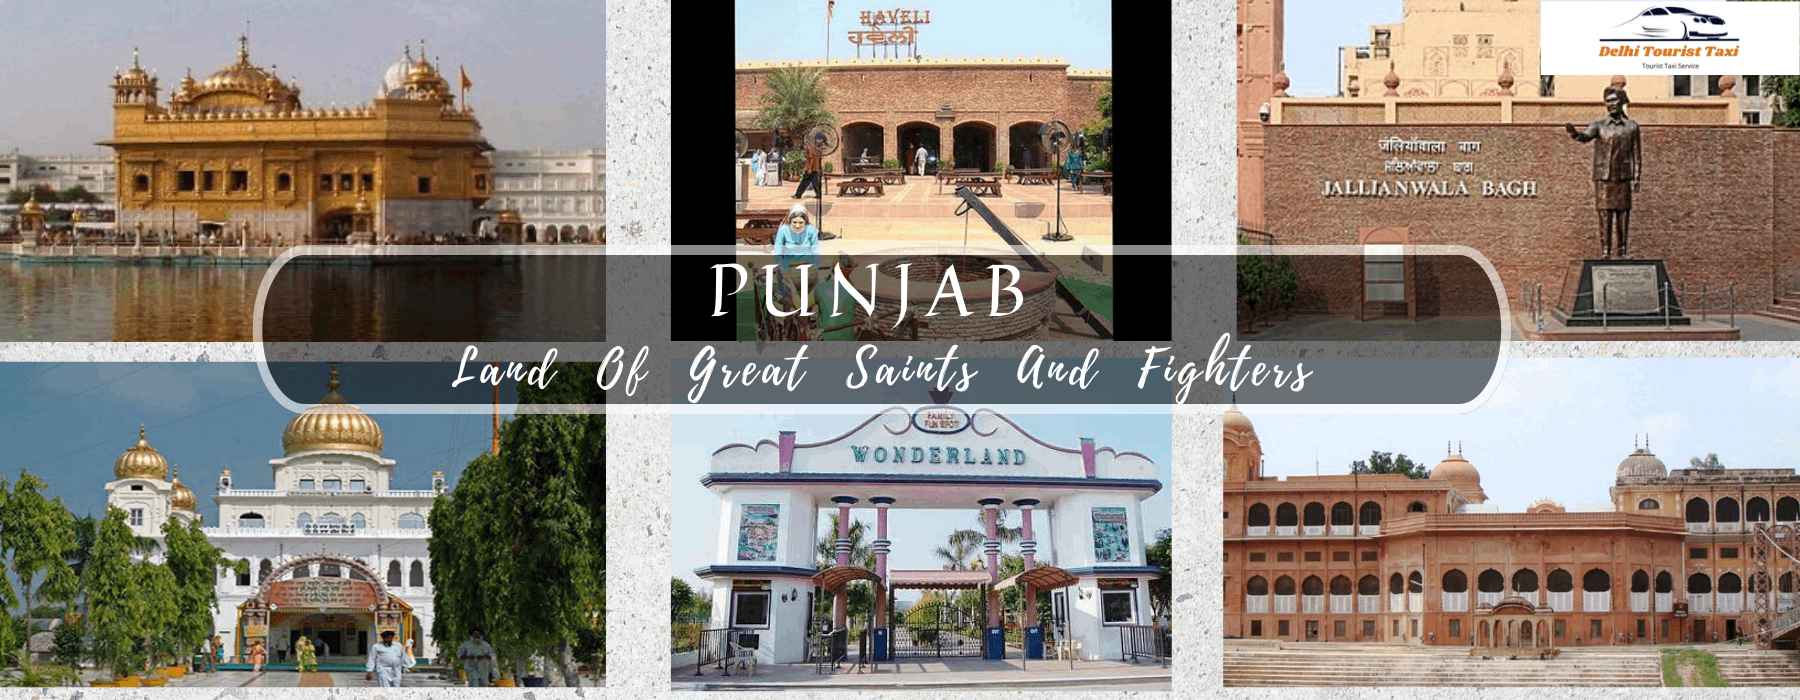 Punjab_tourist_place